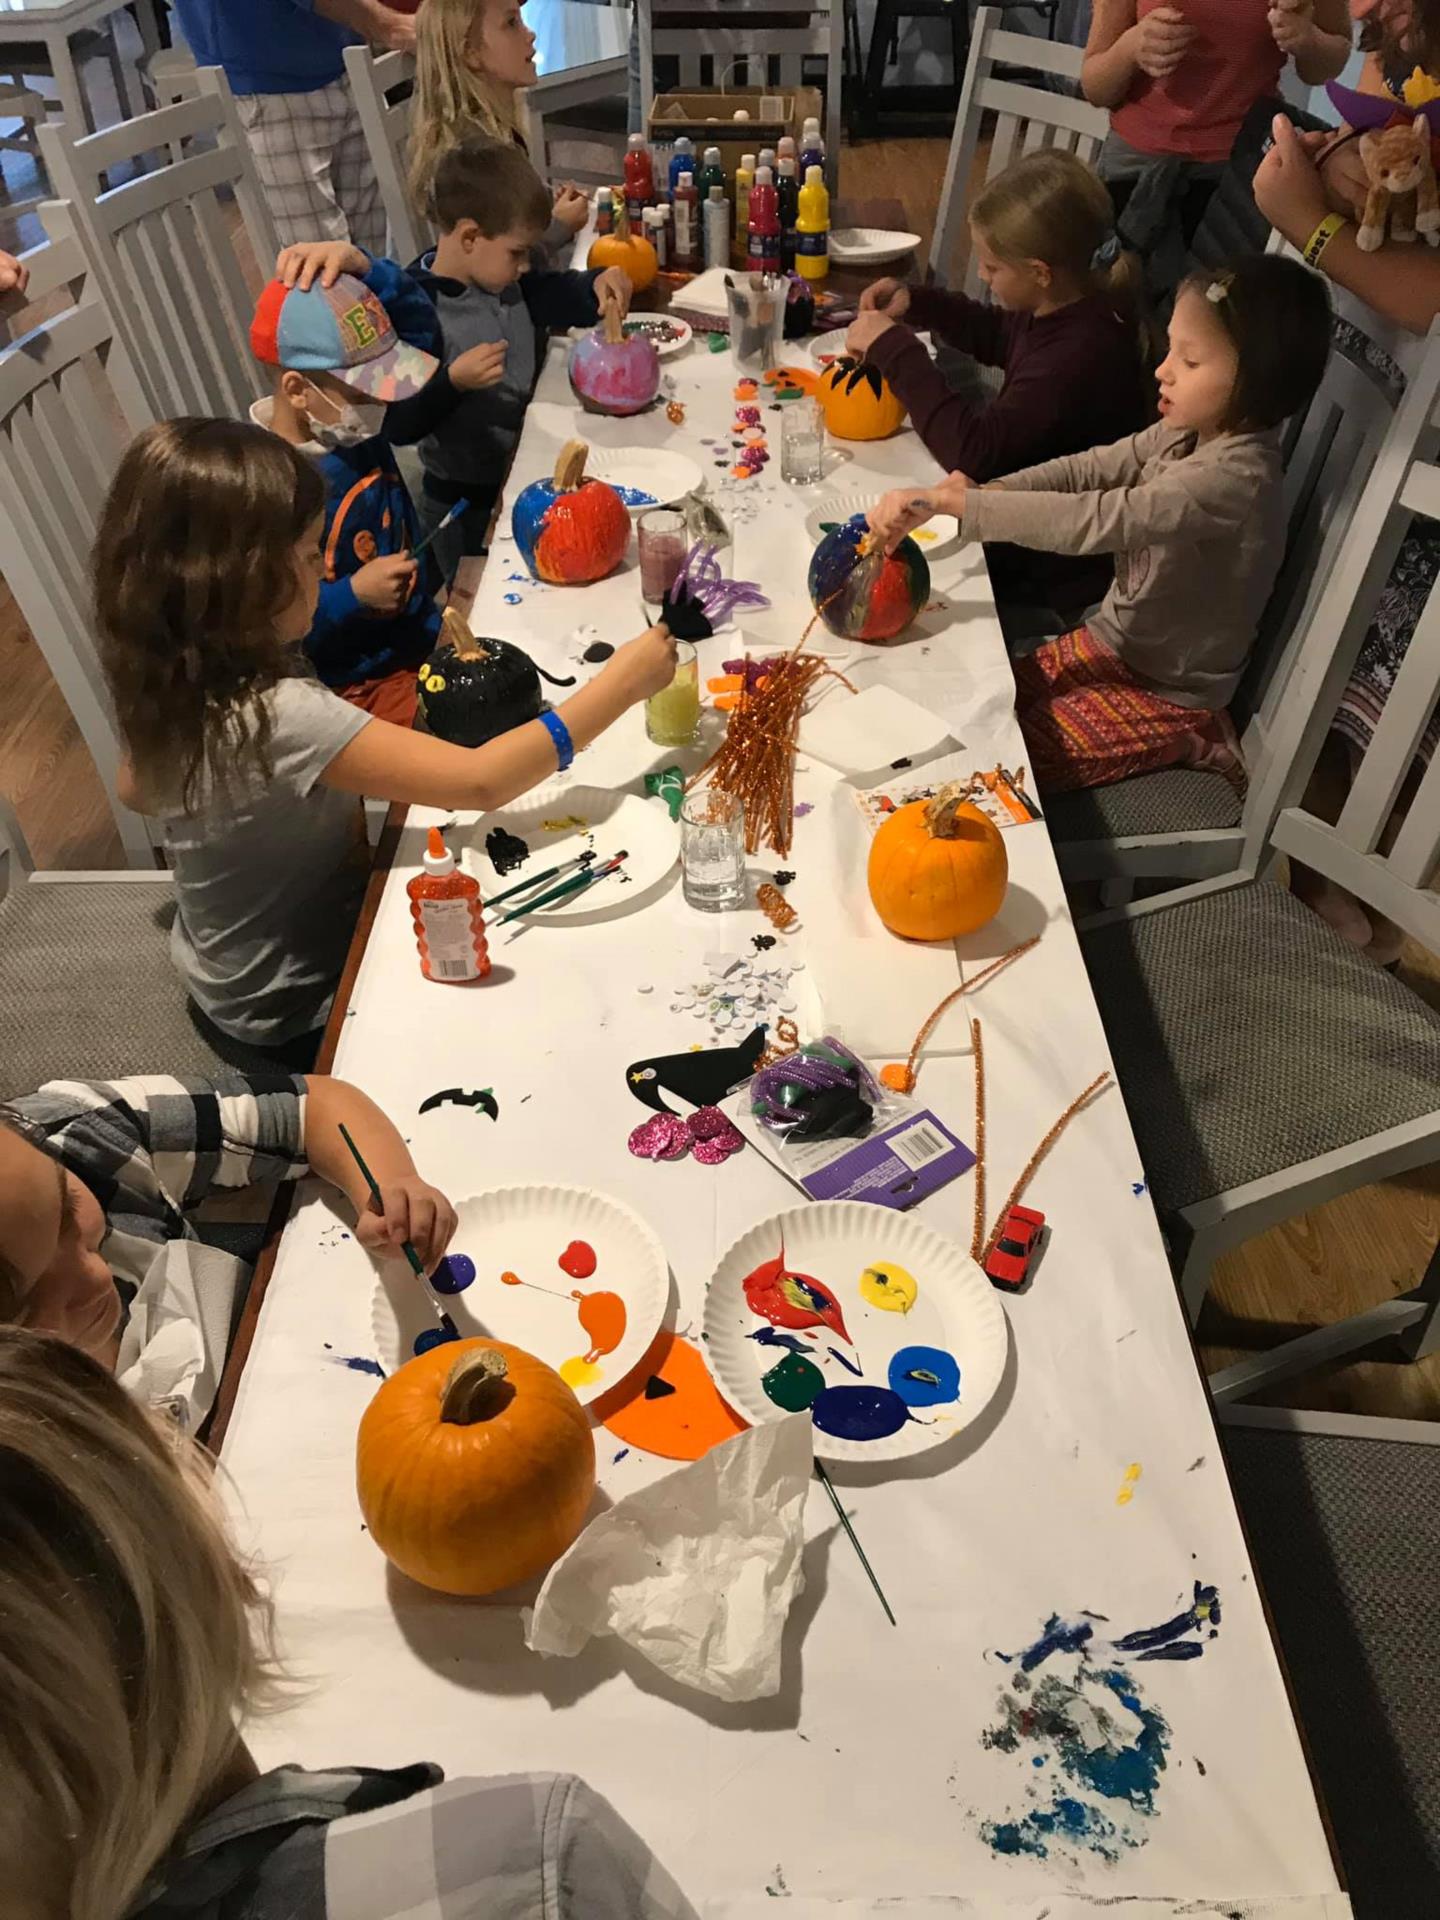 Children Painting Pumpkins